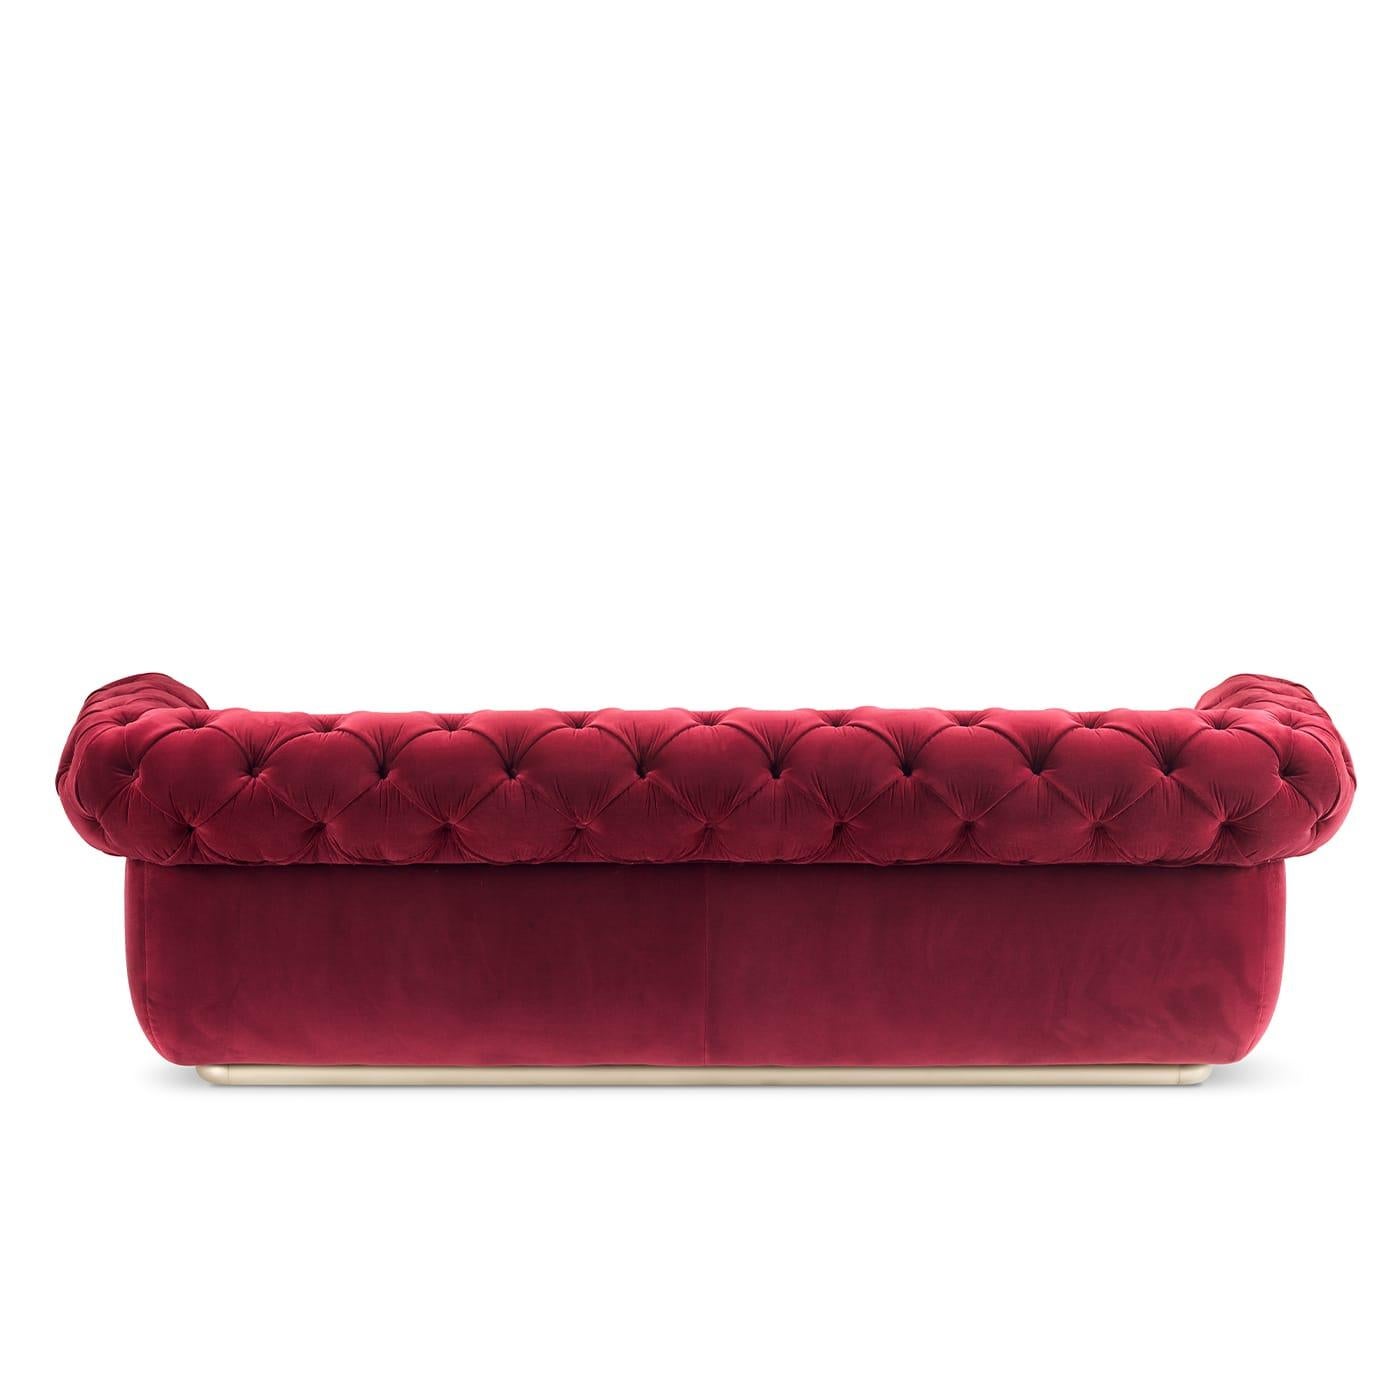 burgundy sofas for sale